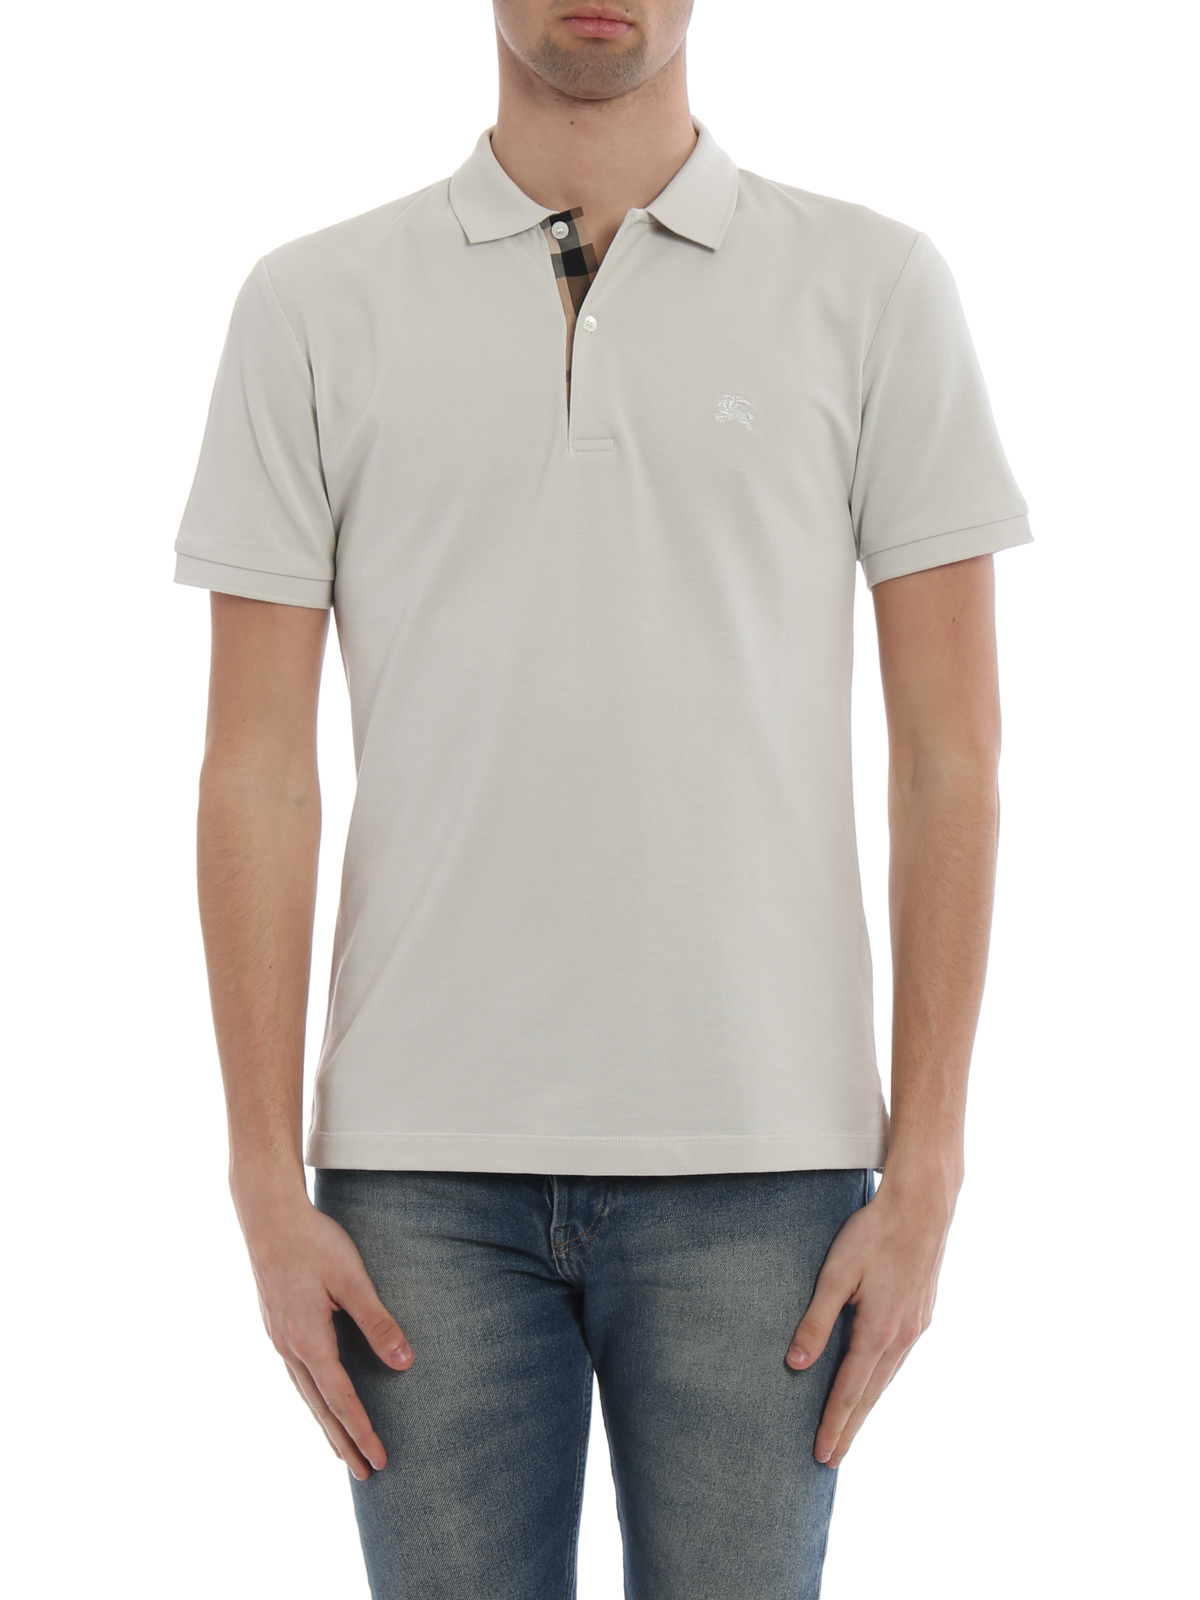 Polo shirts Burberry - Oxford beige cotton polo shirt - 4068778